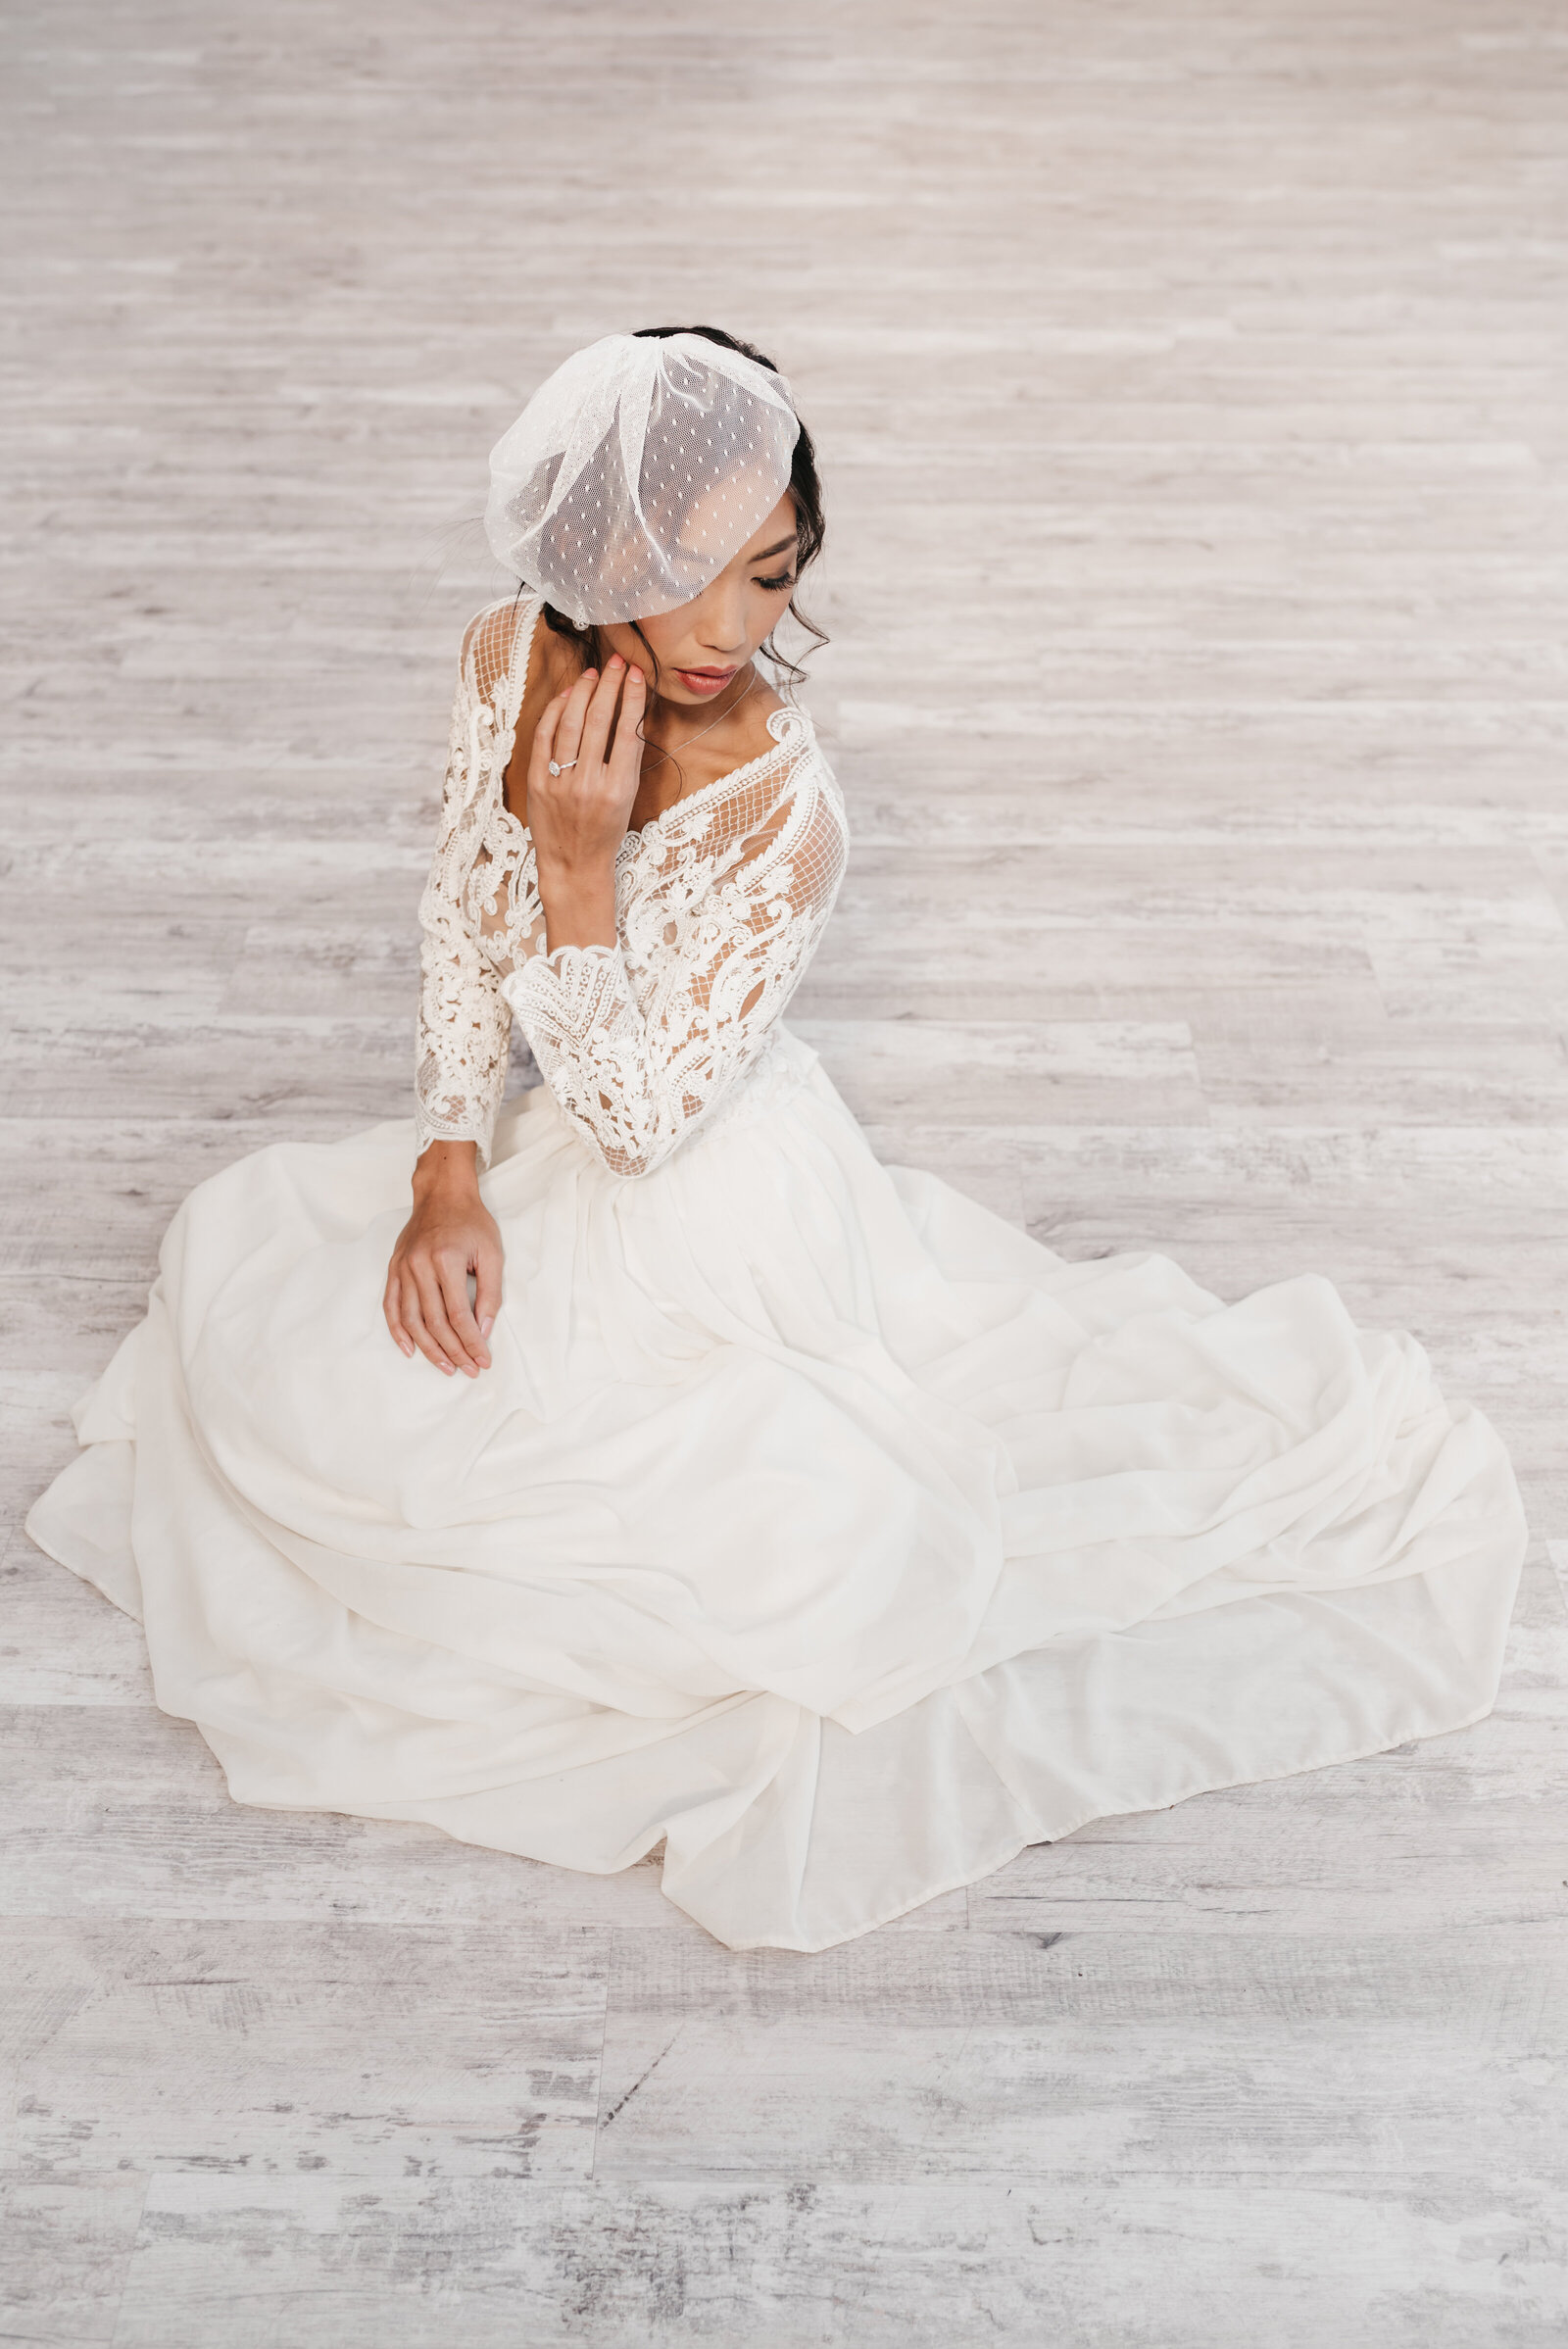 European Classic Romantic Timeless Stunning Bridal Inspiration_0061